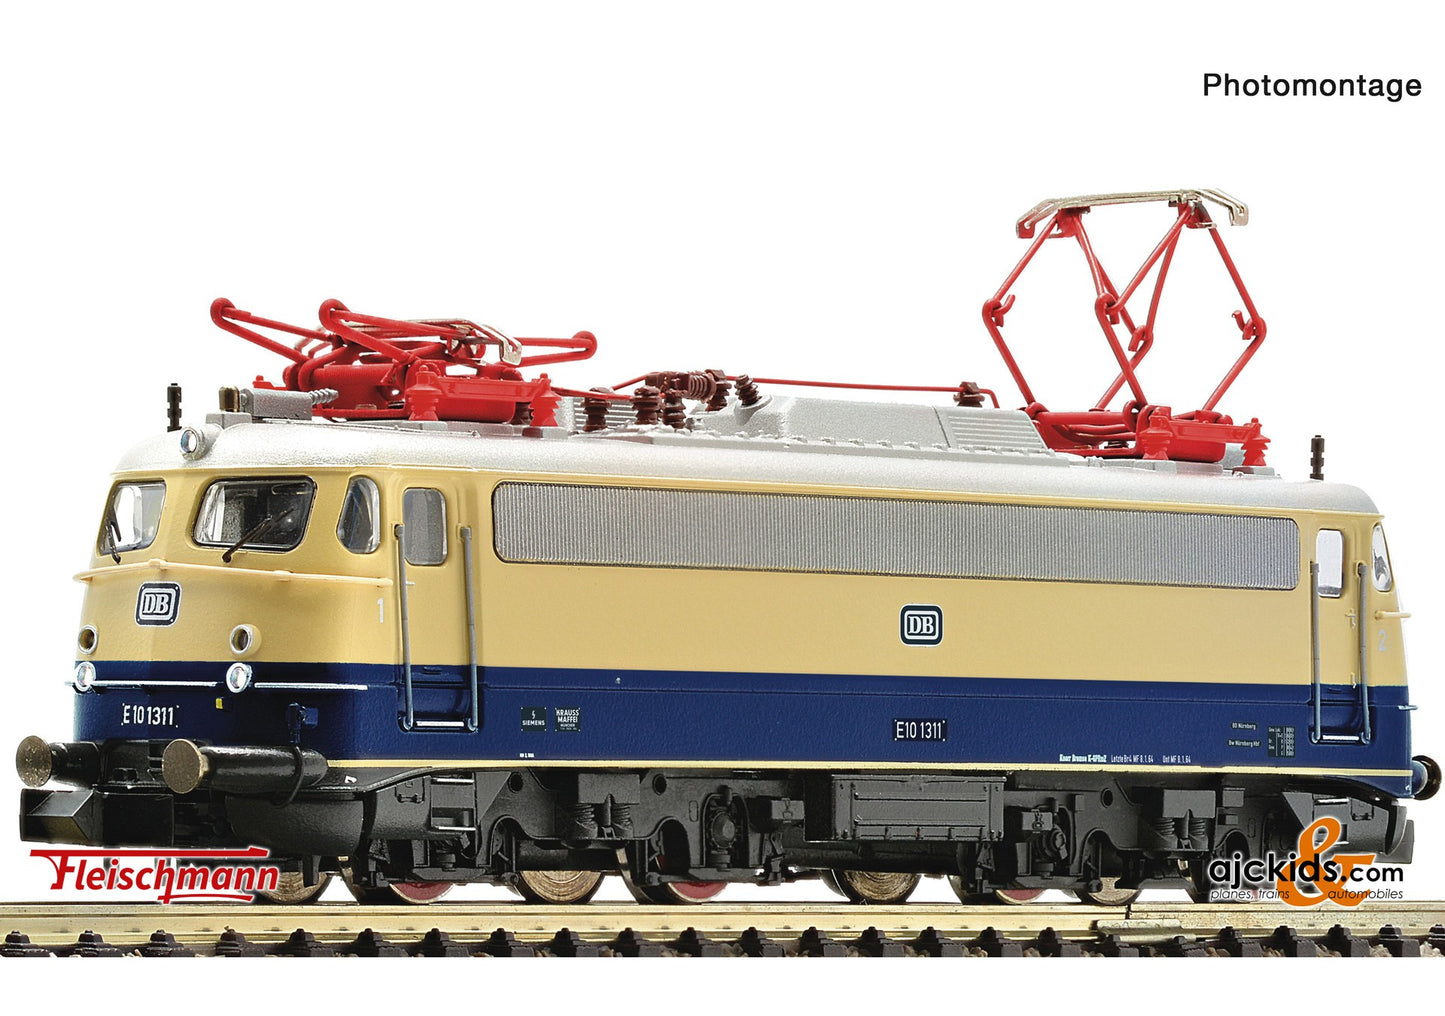 Fleischmann 733879 -Electric locomotive E 10 1311, DB